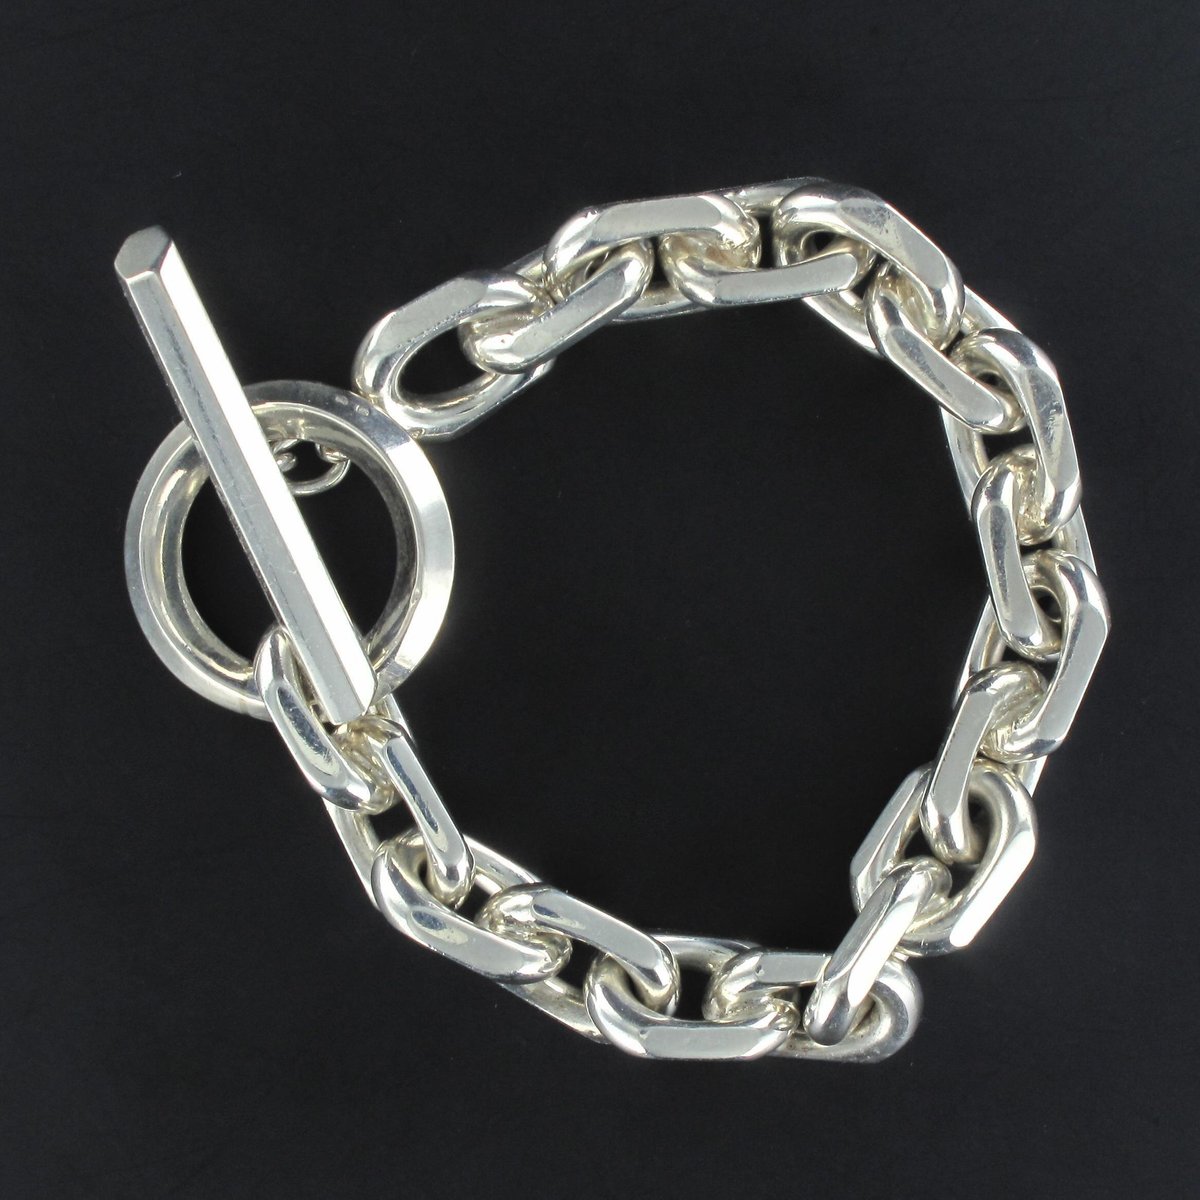 Retro Silver Bracelet, 1960s for sale at Pamono